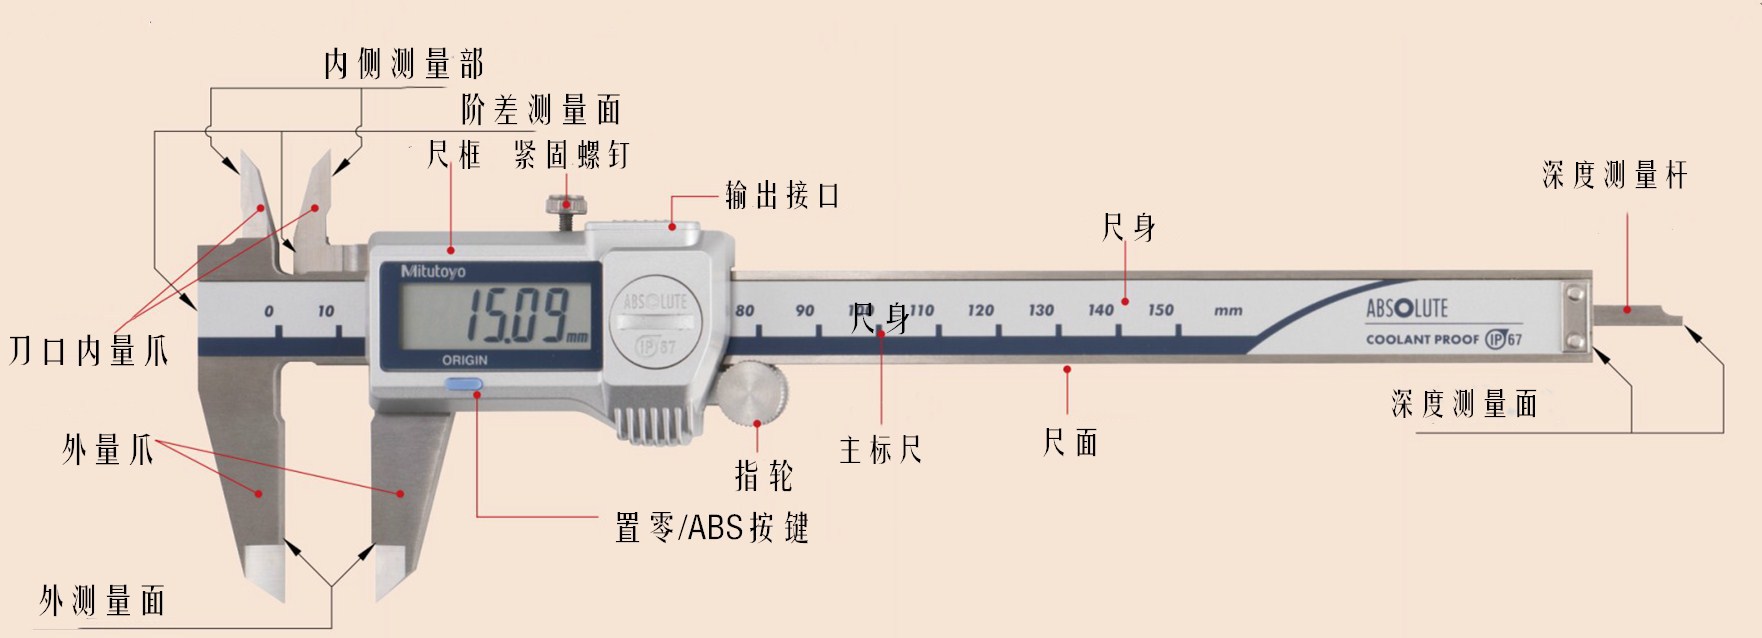 Mitutoyo三丰防水型IP67数显卡尺0-300mm 500-714-10示例图3